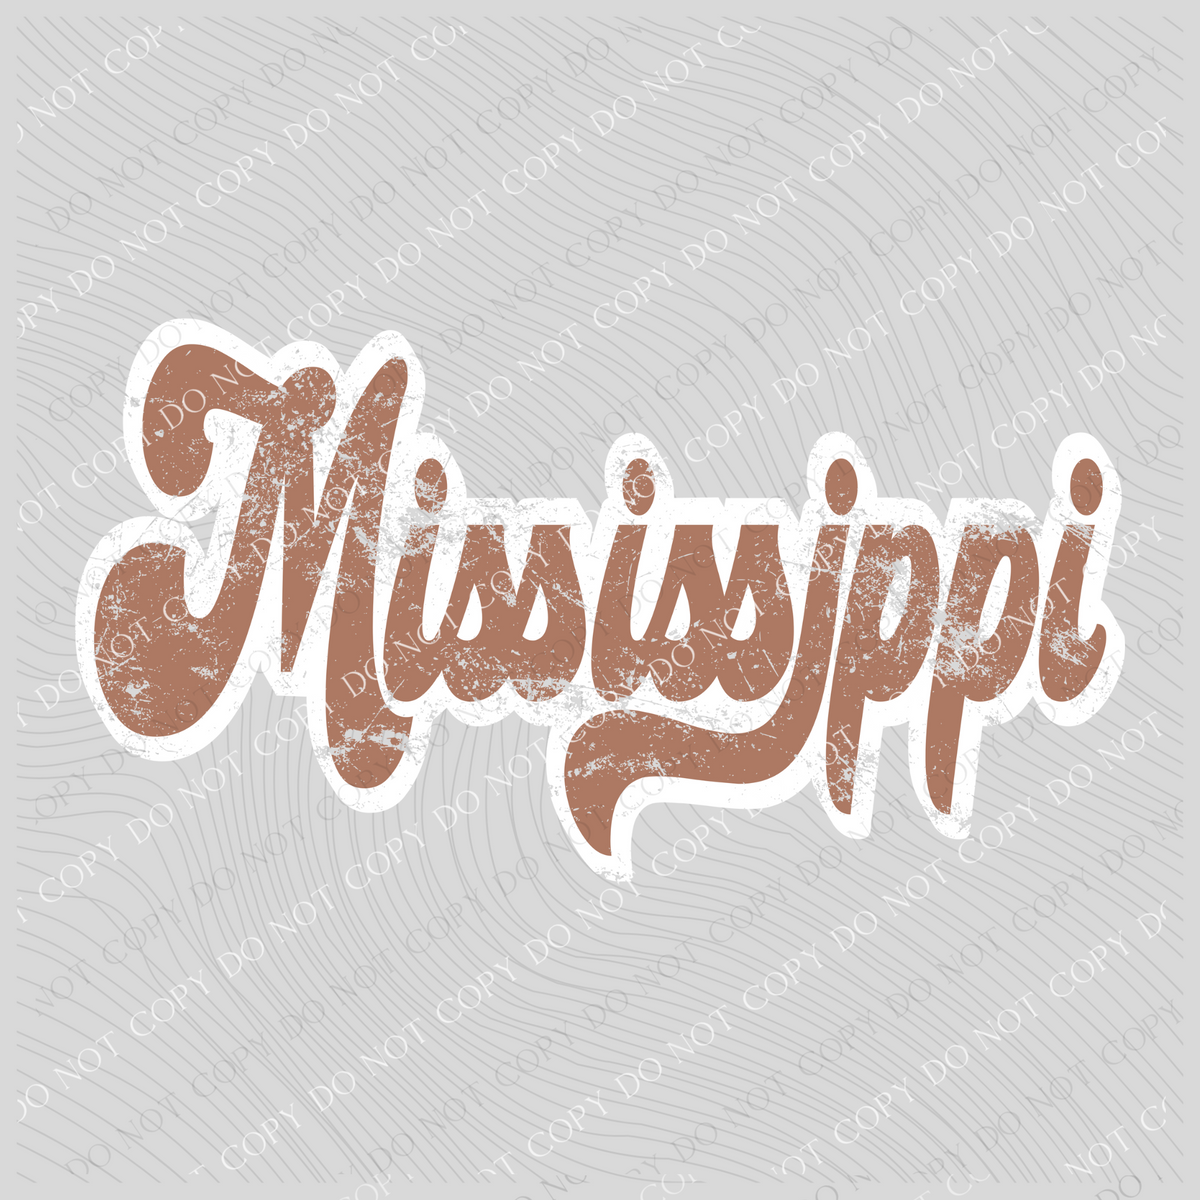 Mississippi Chestnut & White Retro Shadow Distressed Digital Download, PNG